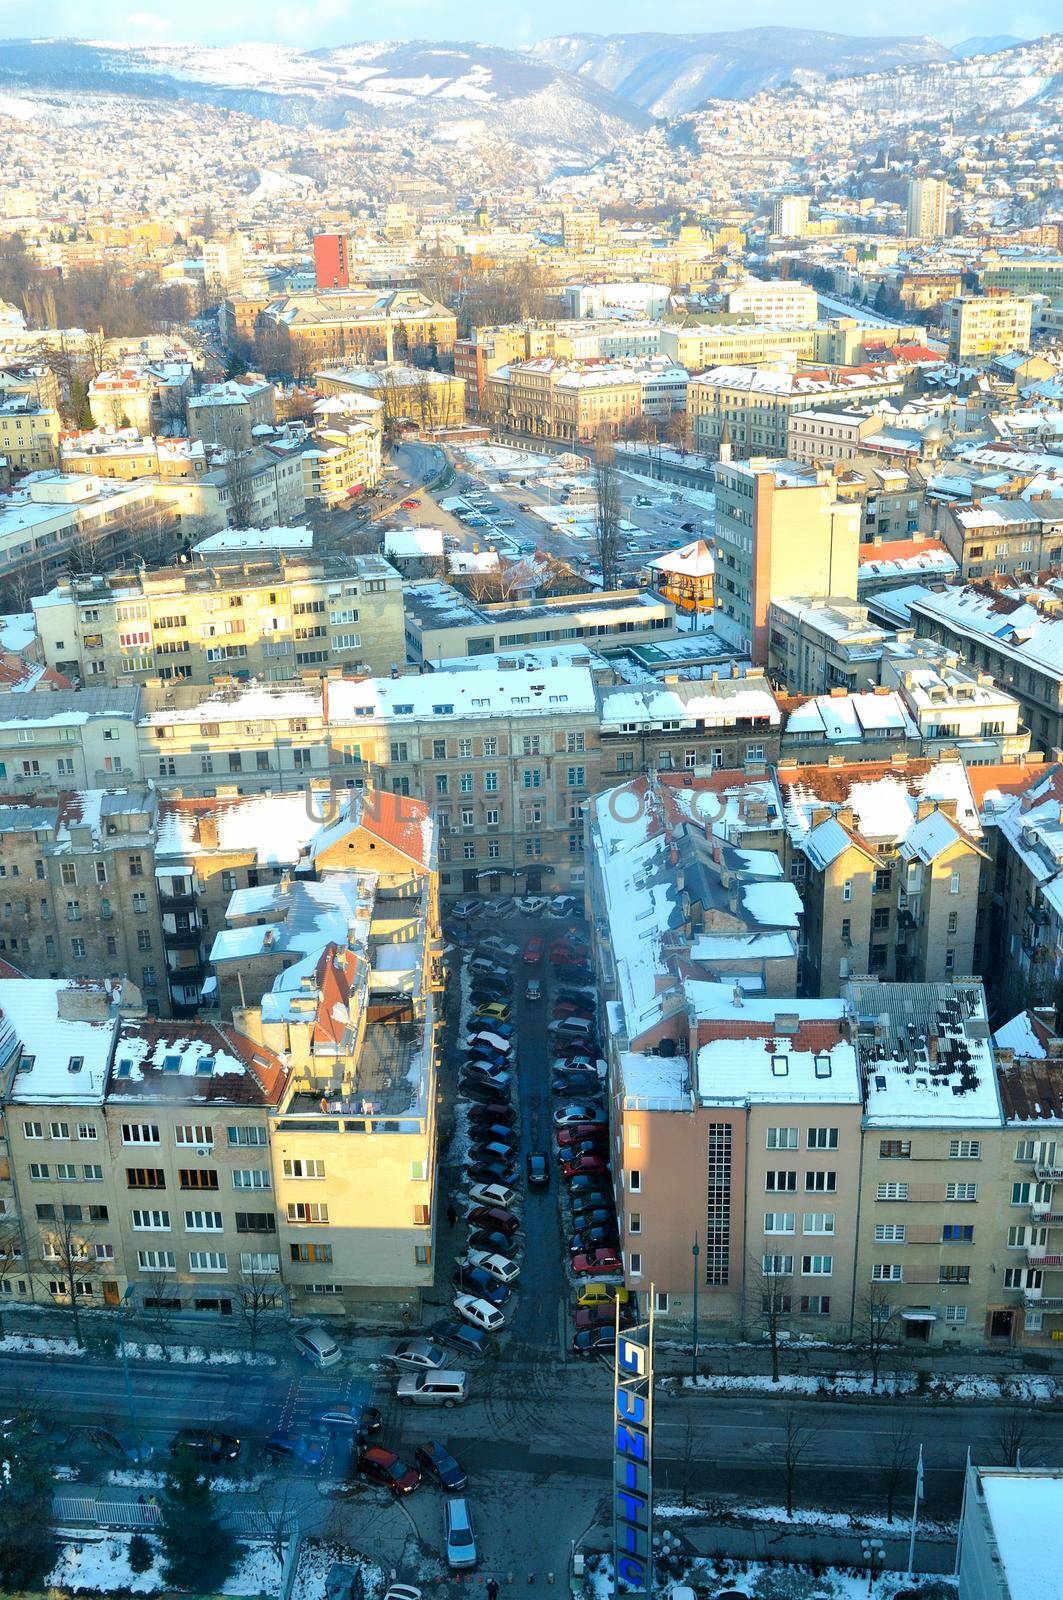 sarajevo city landscape at winter season